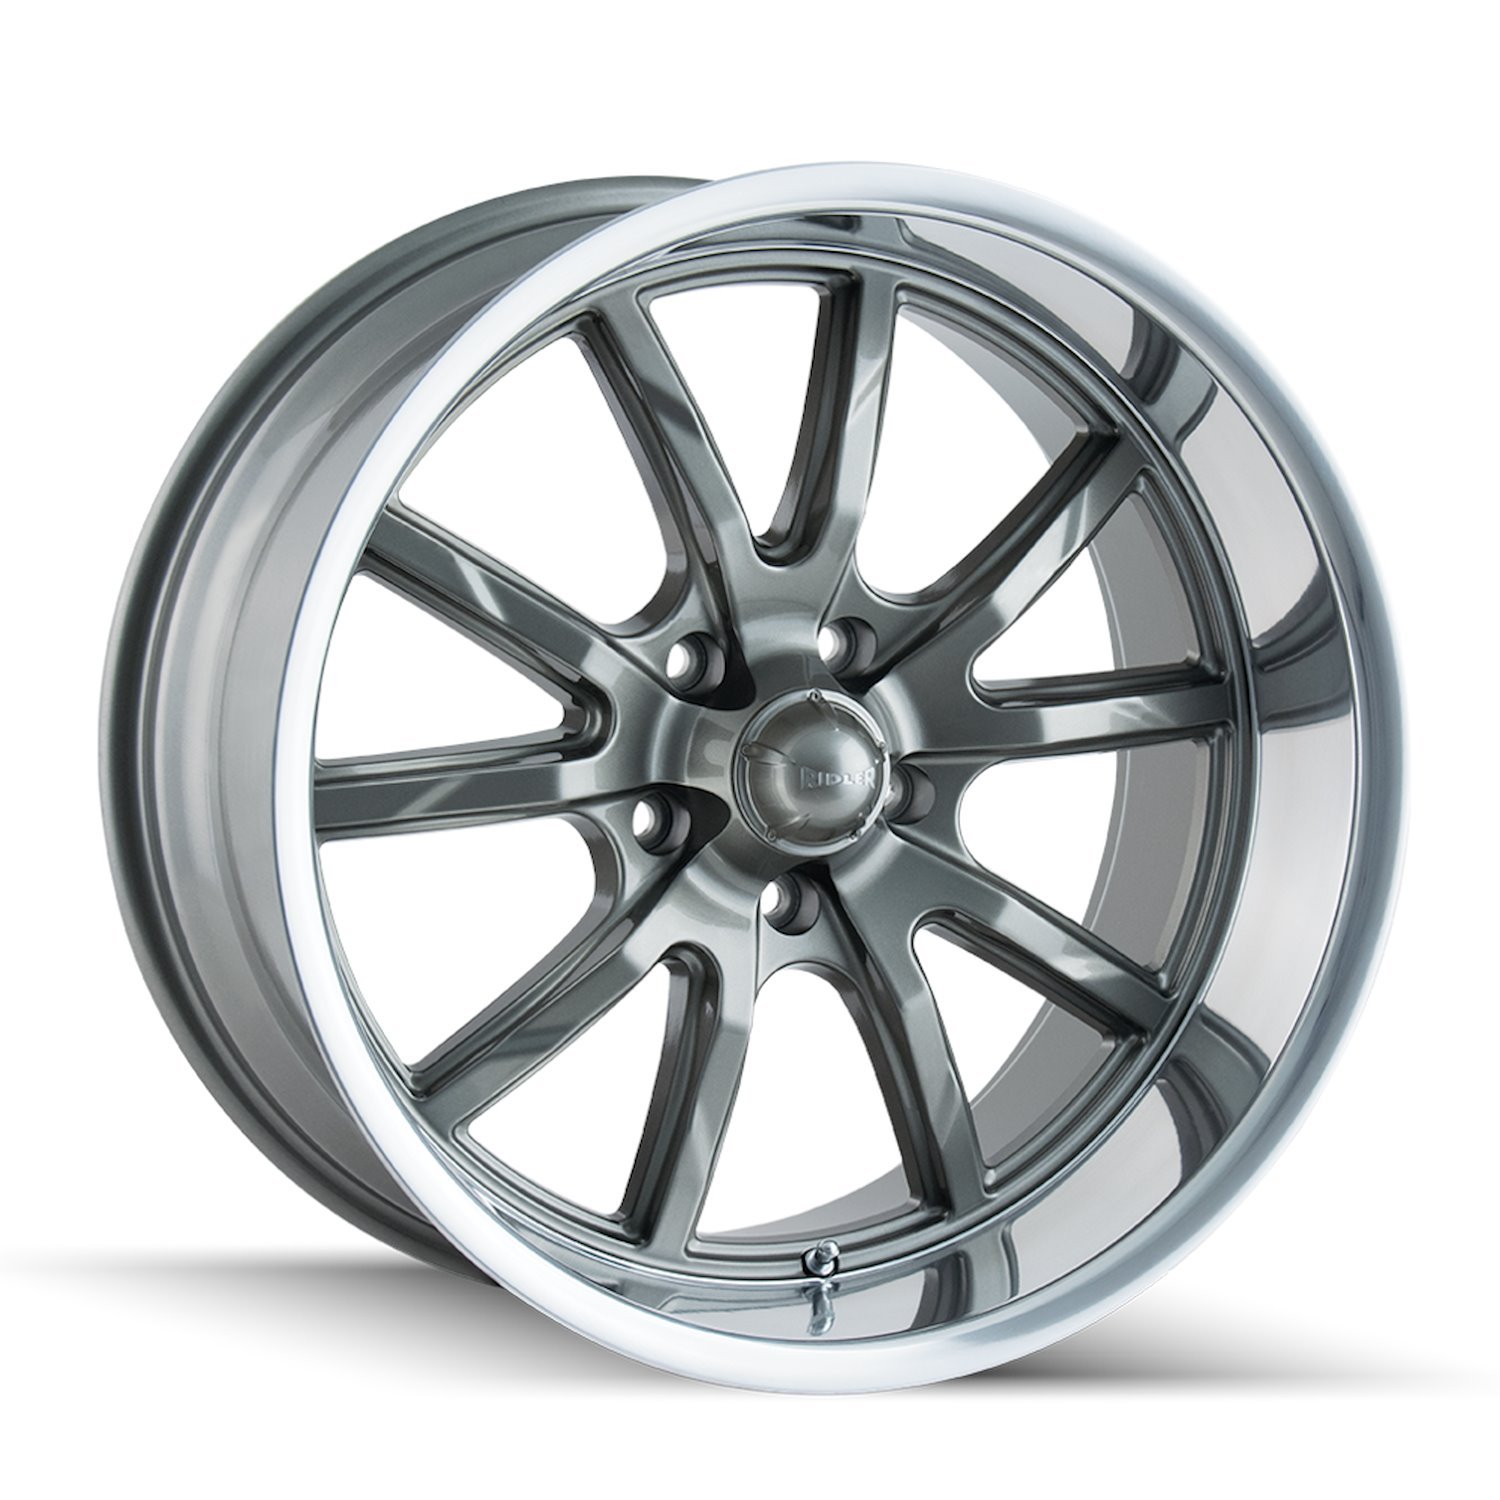 650-7765G 650-Series Wheel [Size: 17" x 7"] Gloss Grey Polished Finish